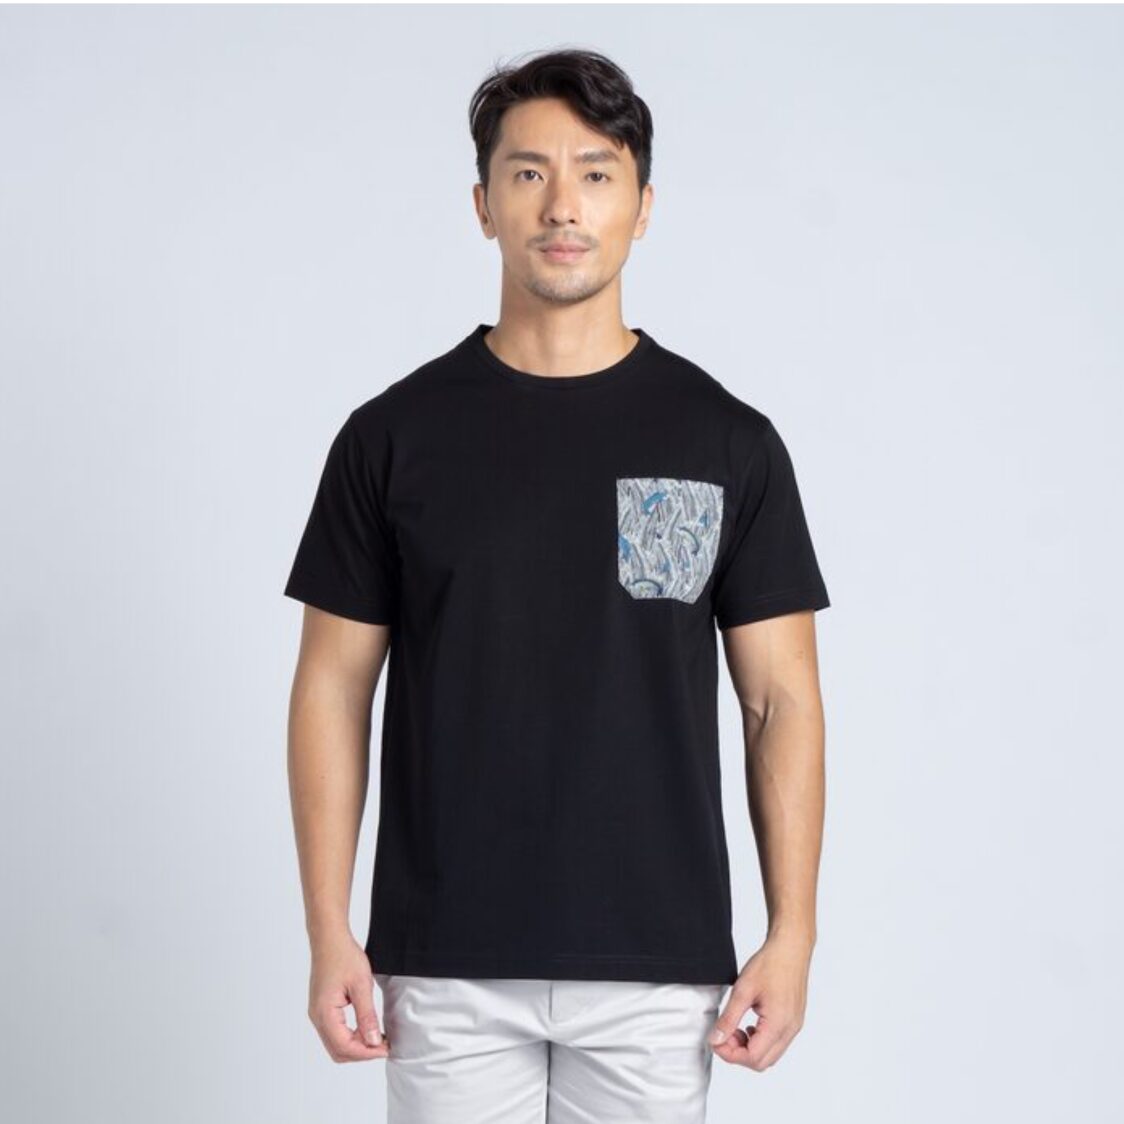 Kurt Woods Made With Liberty Fabric Shiomi Mercerized T-Shirt Black